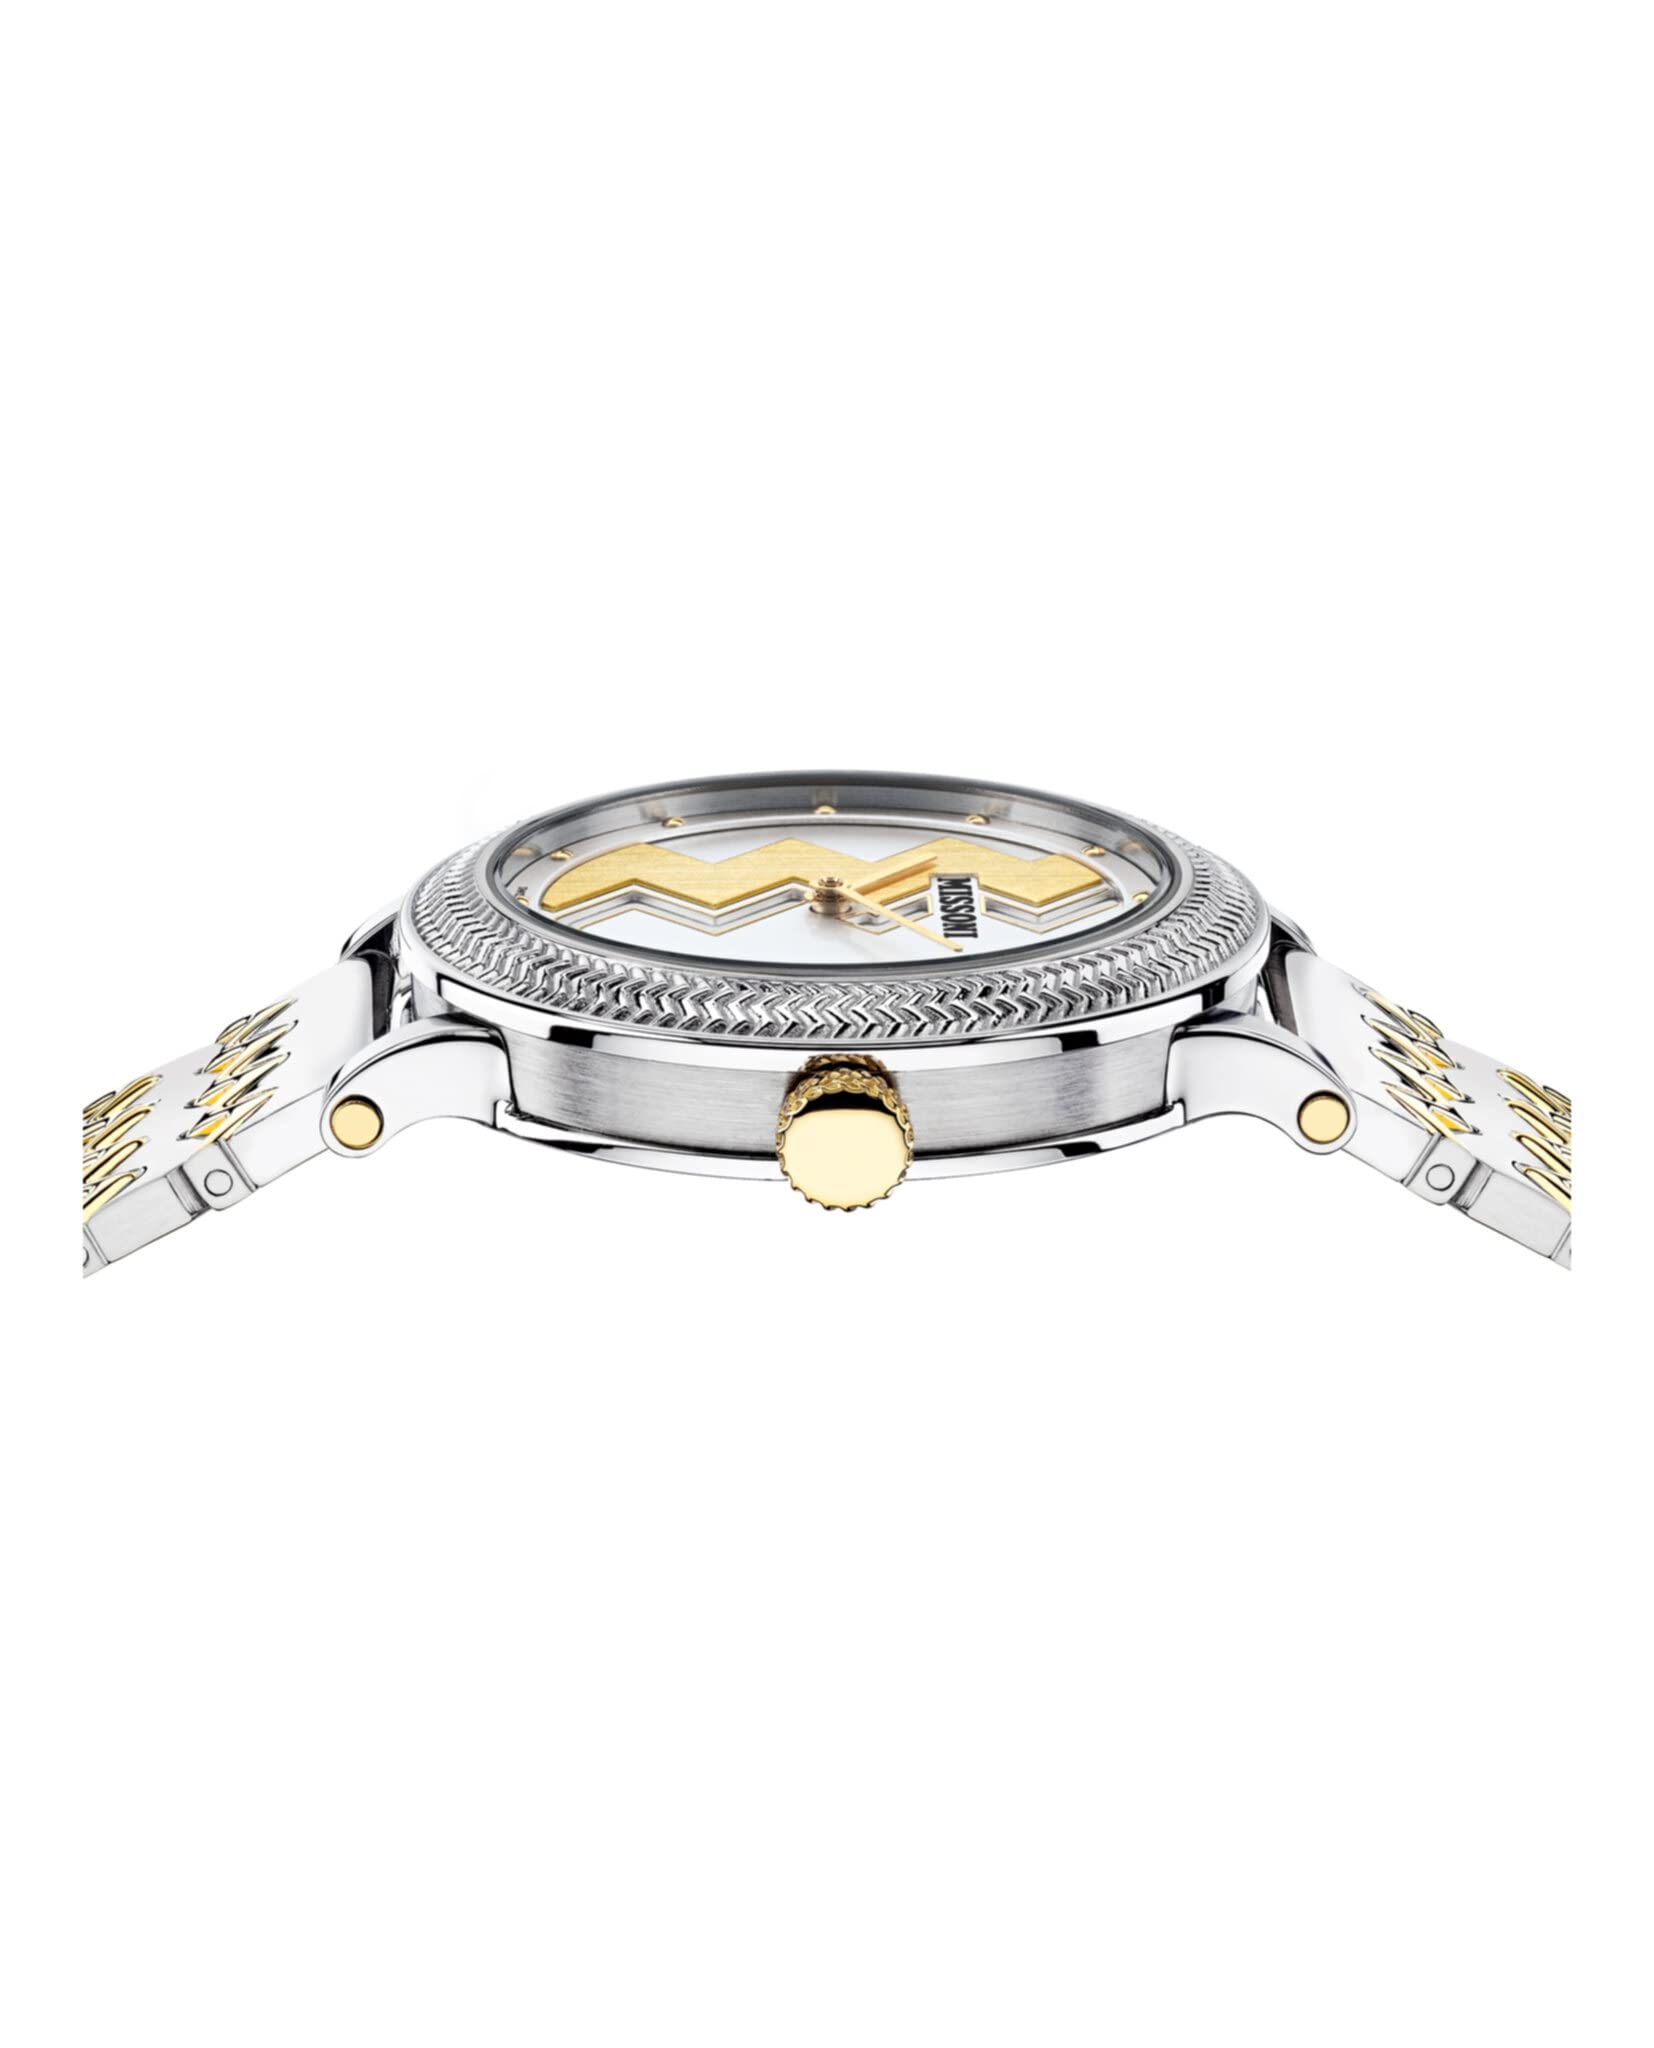 Missoni Missoni Optic Zigzag Bracelet Watch